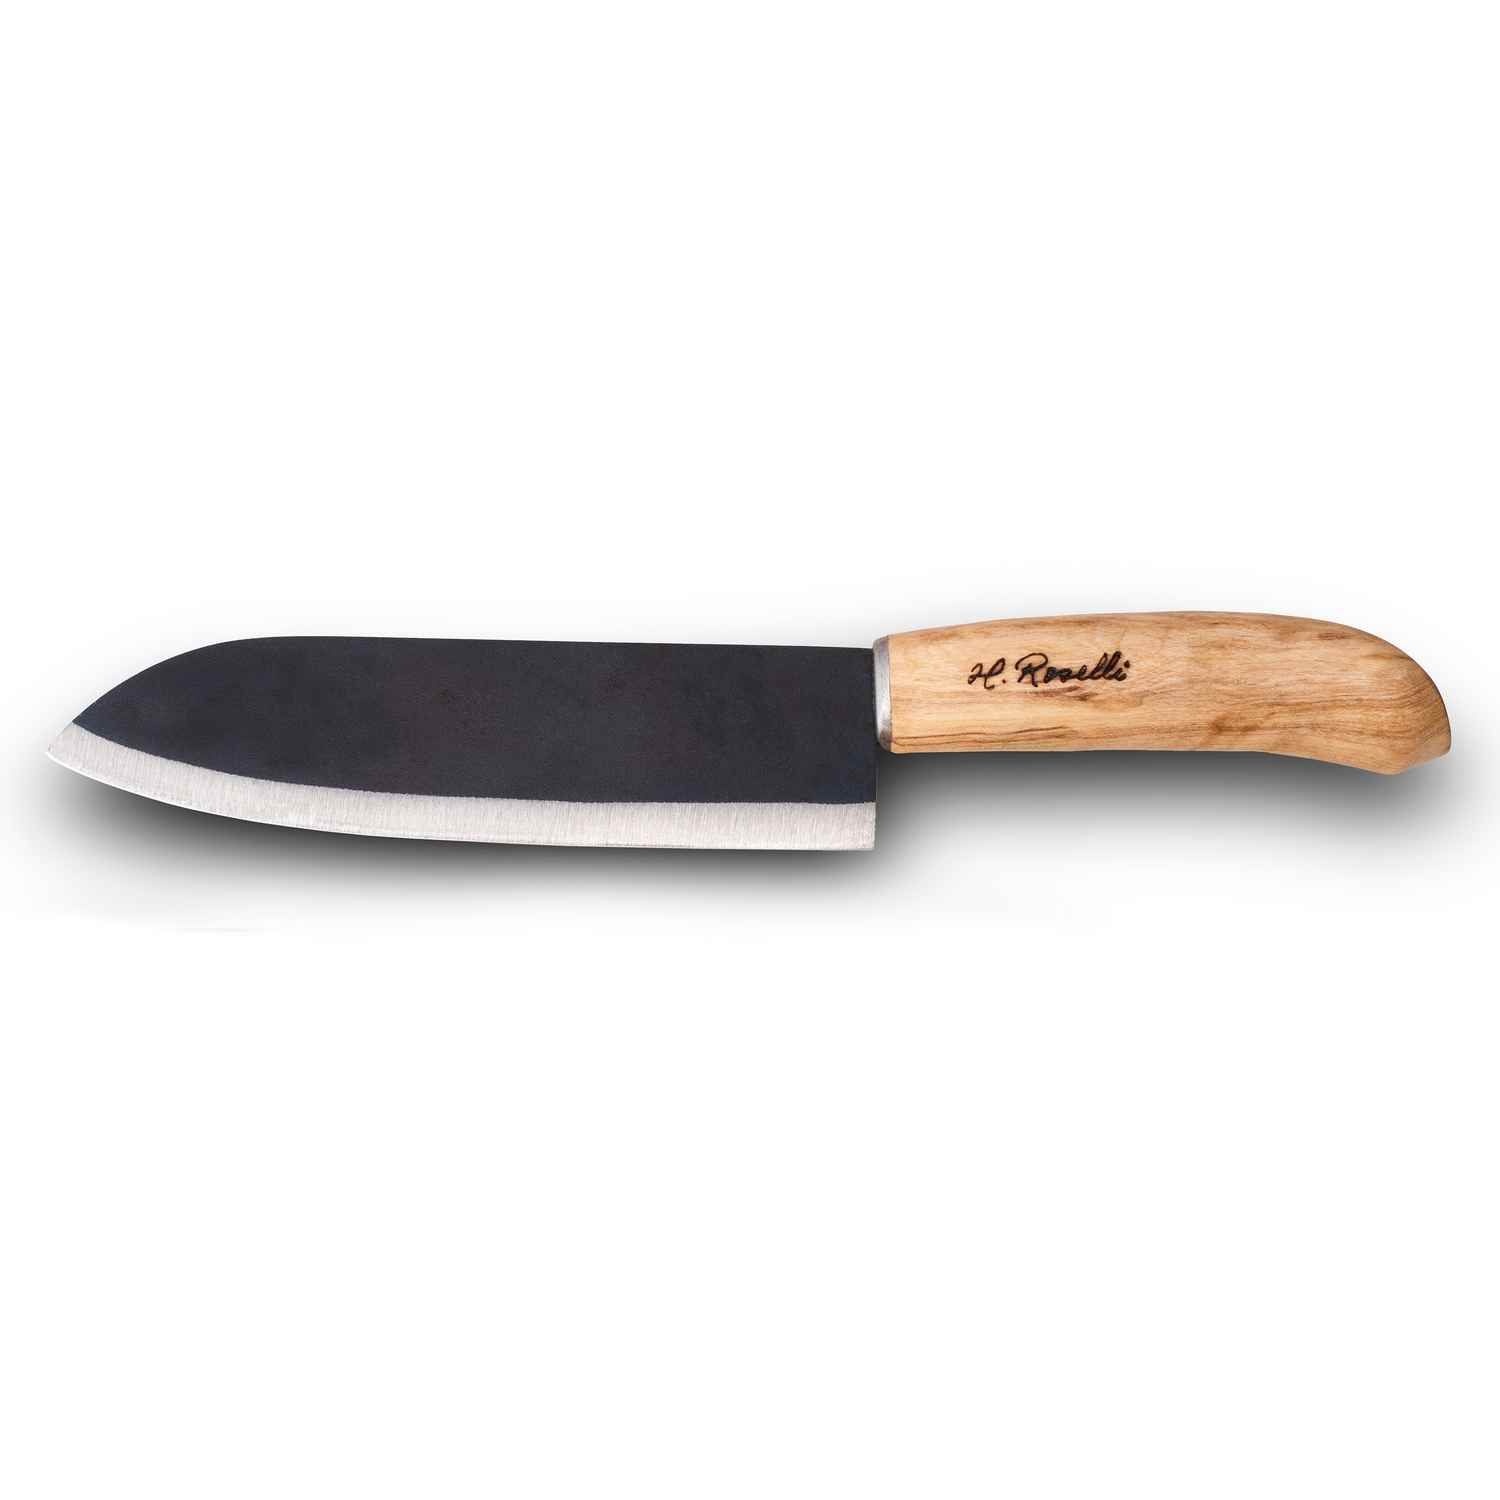 Roselli R710 "Japanese Chef Knife"